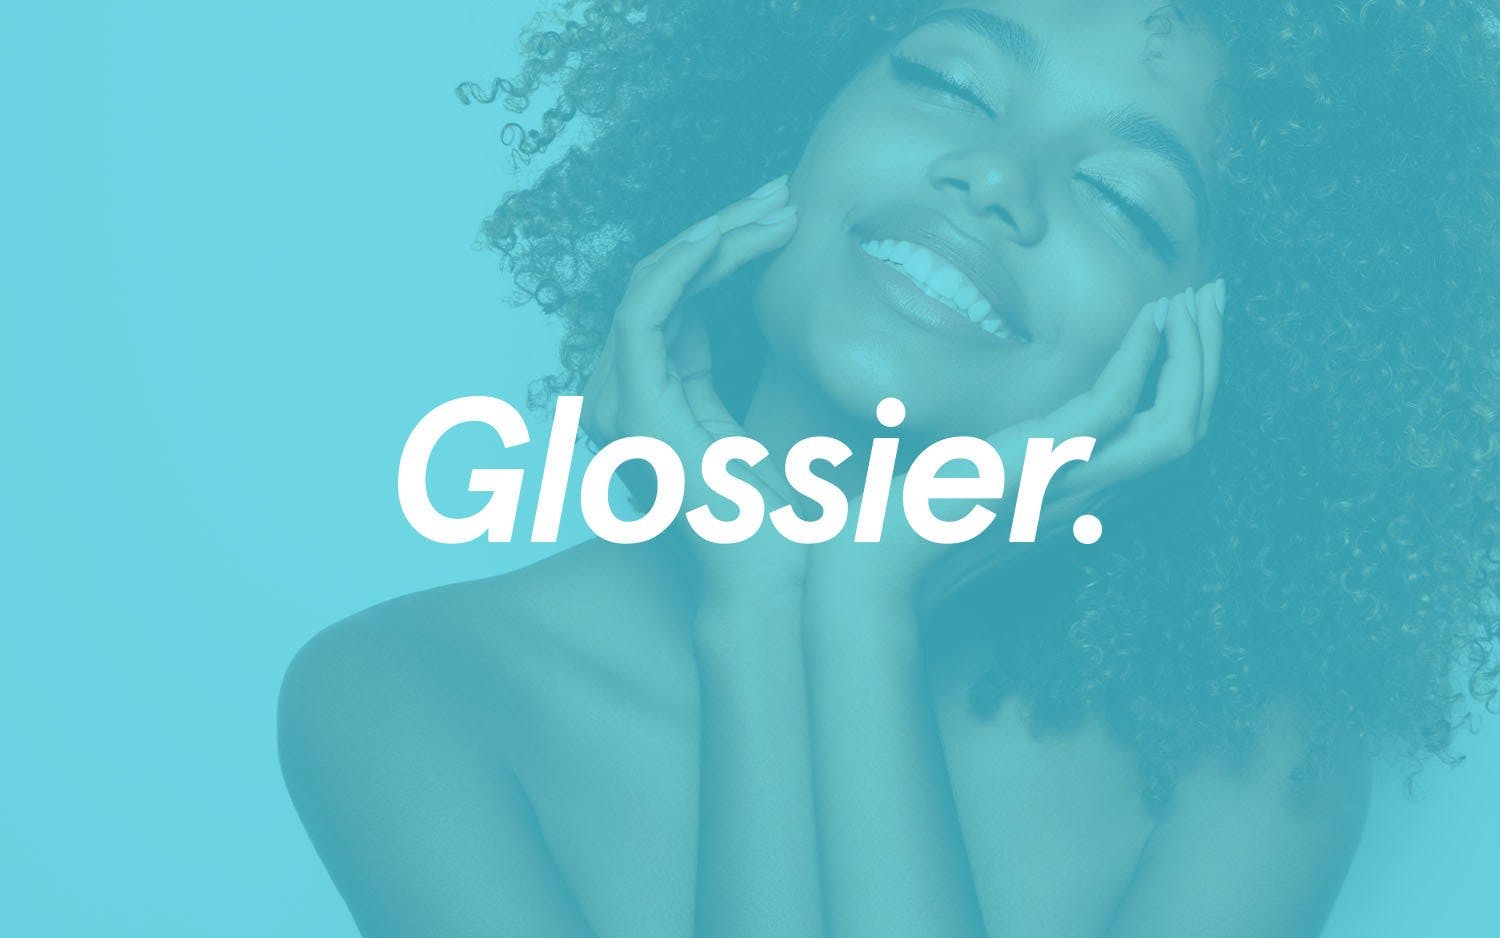 Glossier helped customers